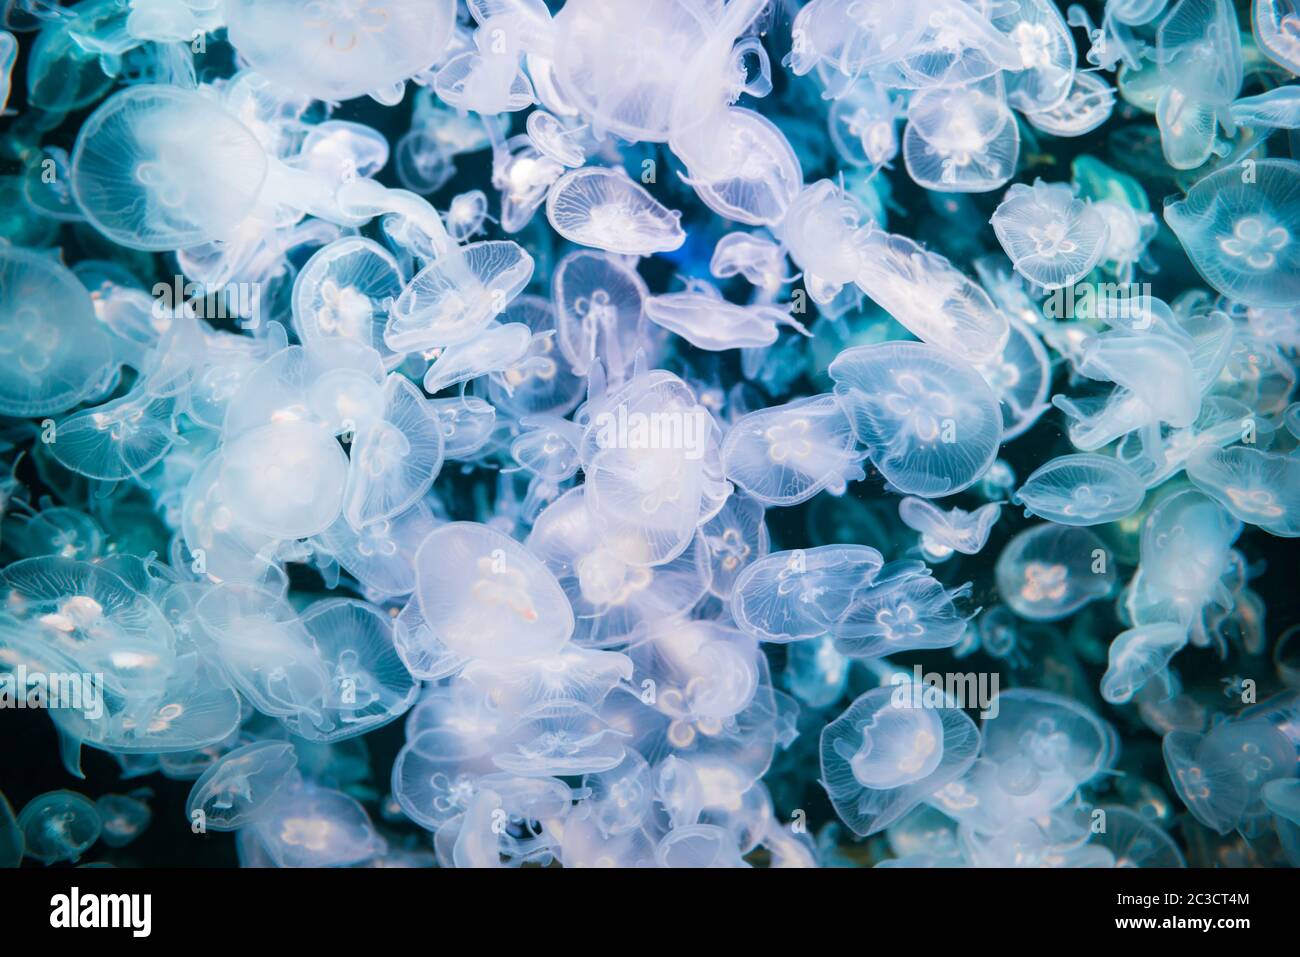 Many jellyfishes aurelia aurita Stock Photo